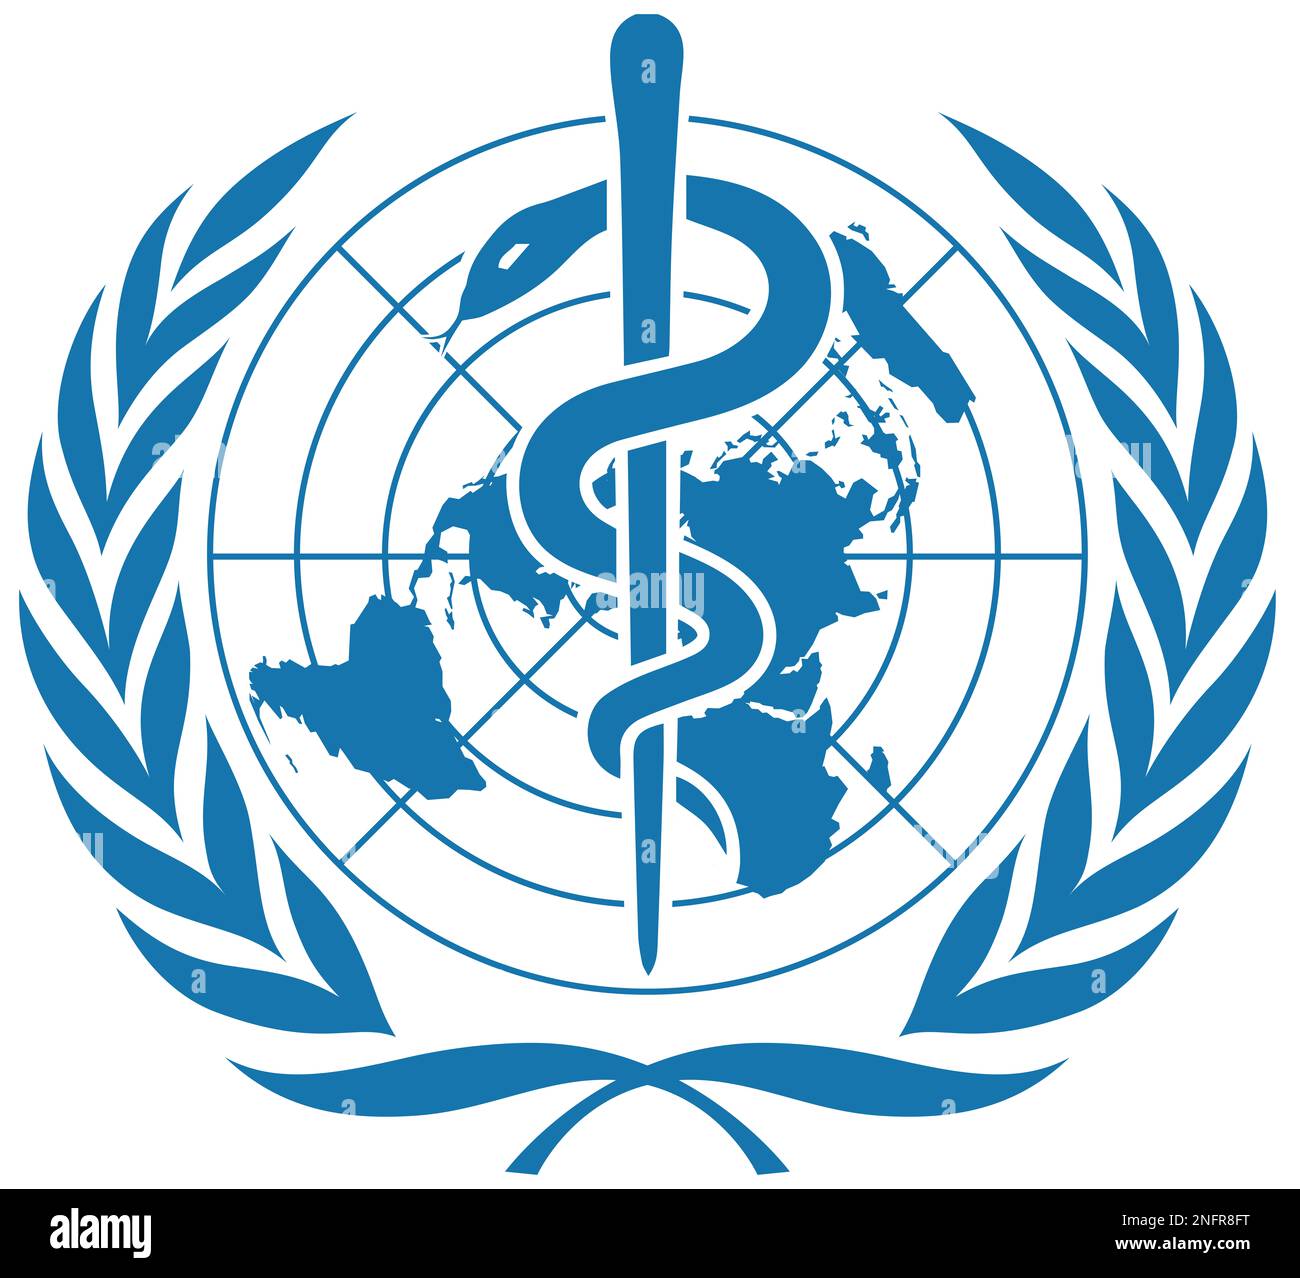 World Health Organization logo Stock Photo